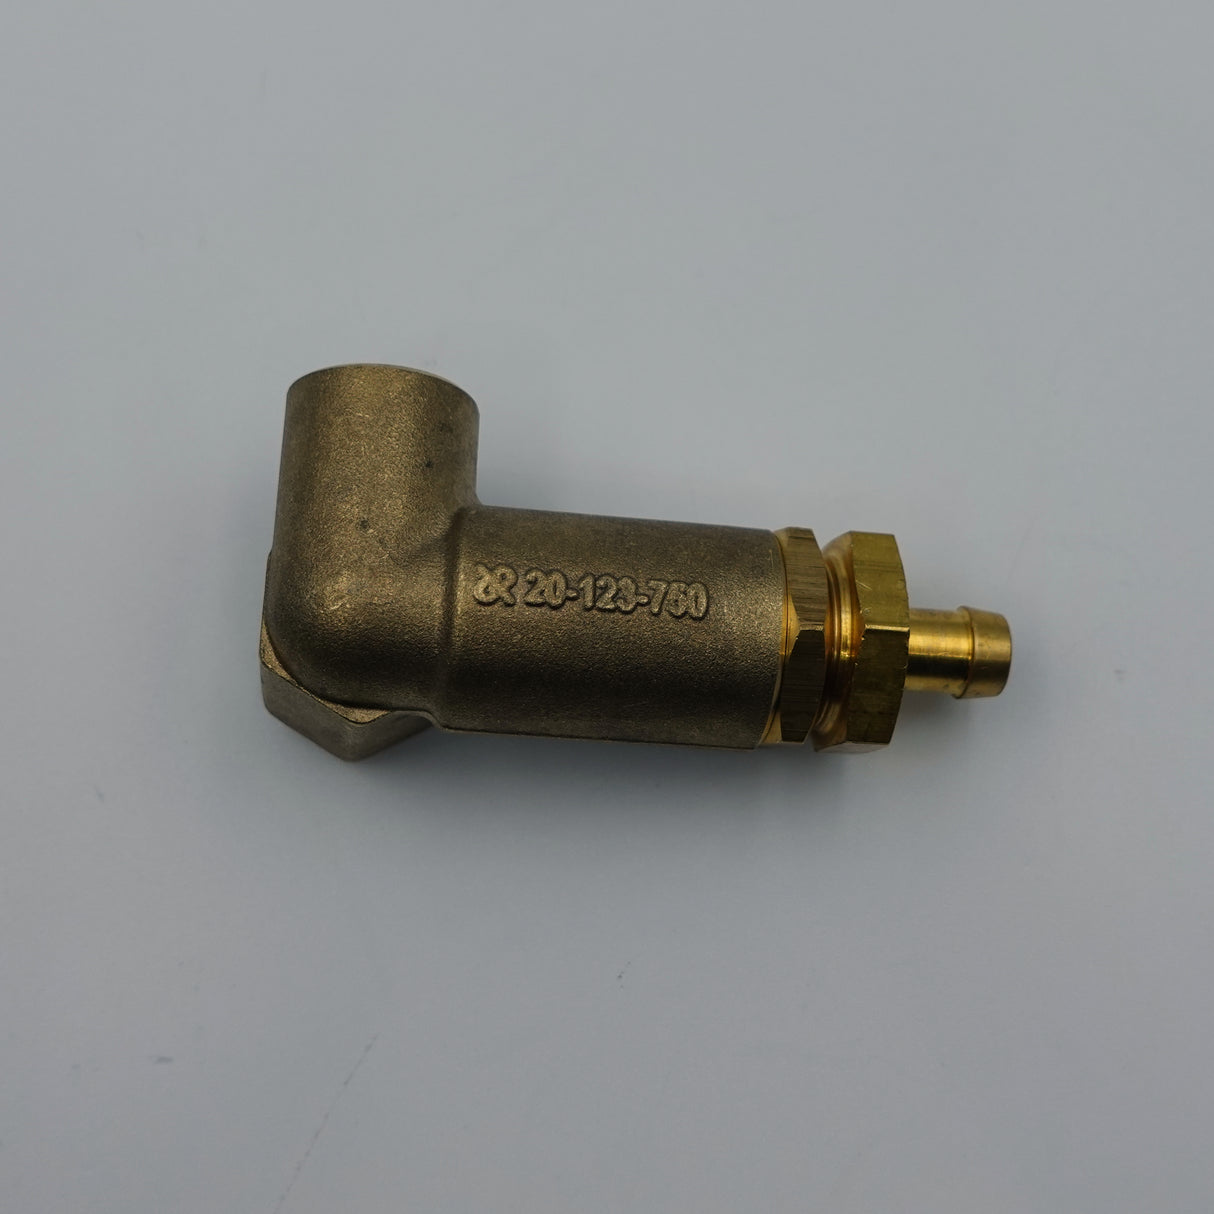 Silvia adjustable pressure relief valve